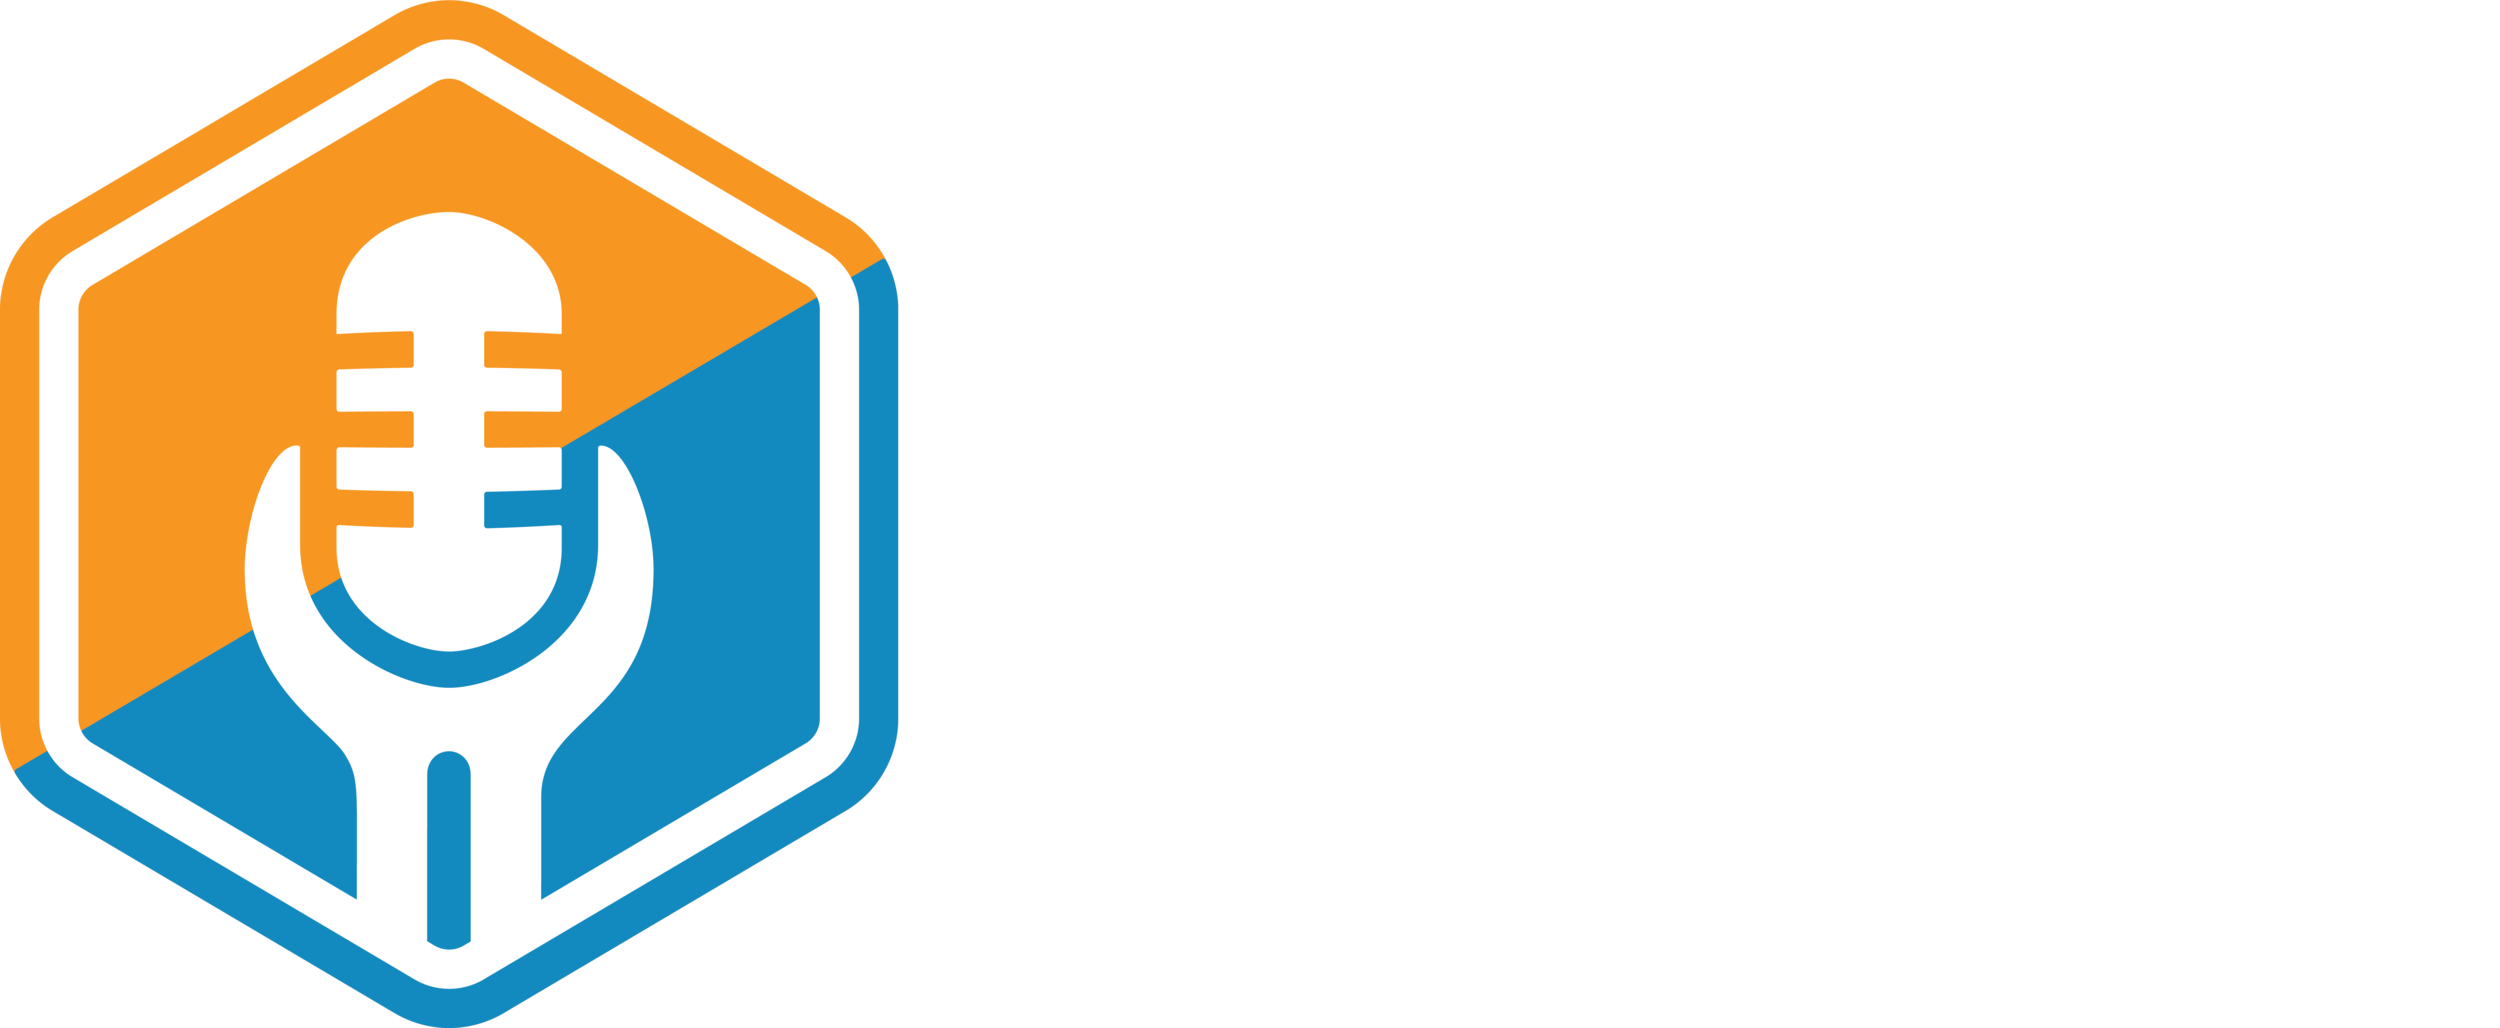 PRX Podcast Garage Logo